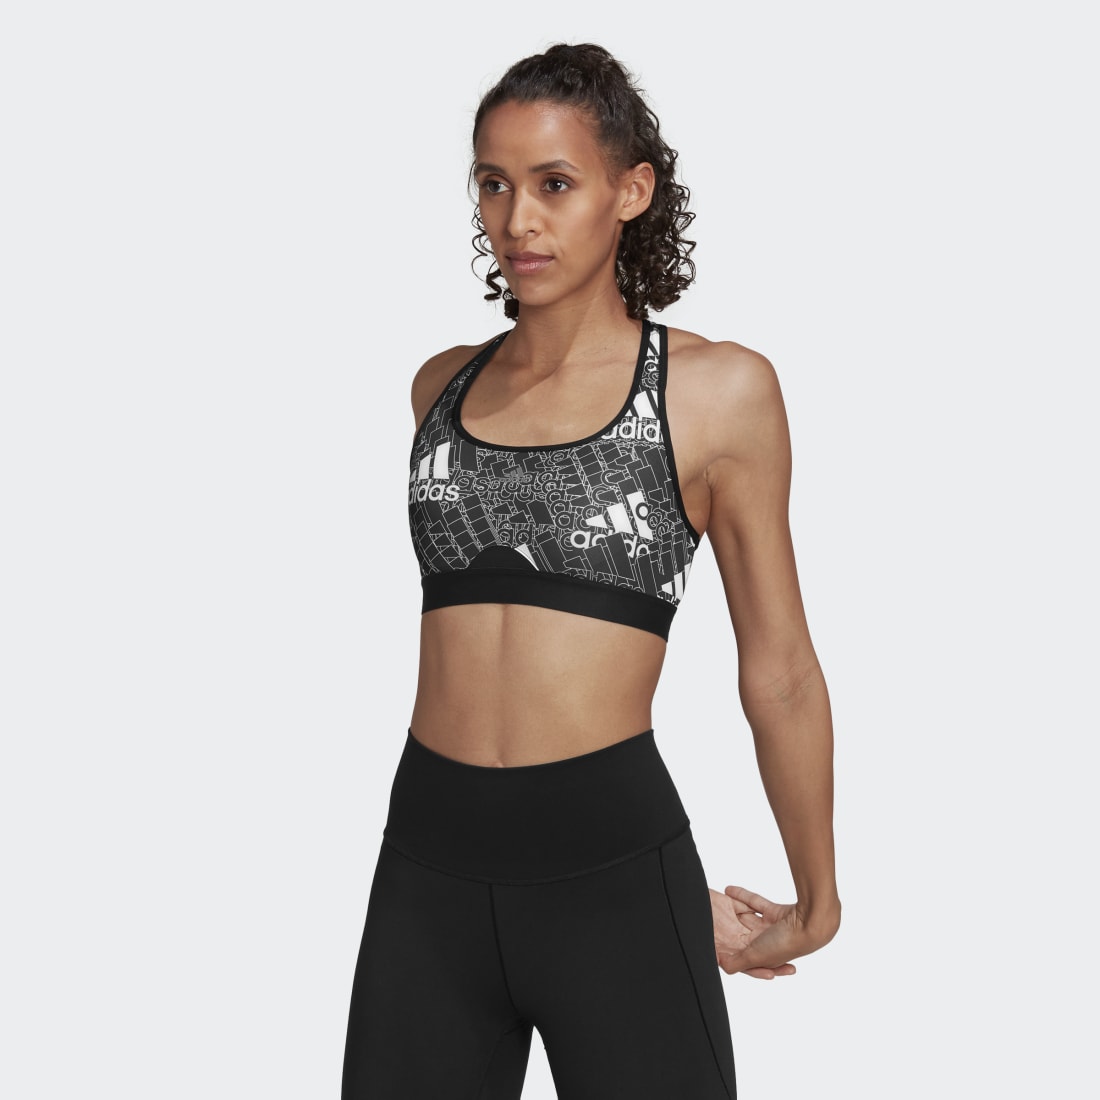 adidas, Power React Three Stripes Womens Medium Support Sports Bra, Black/ White